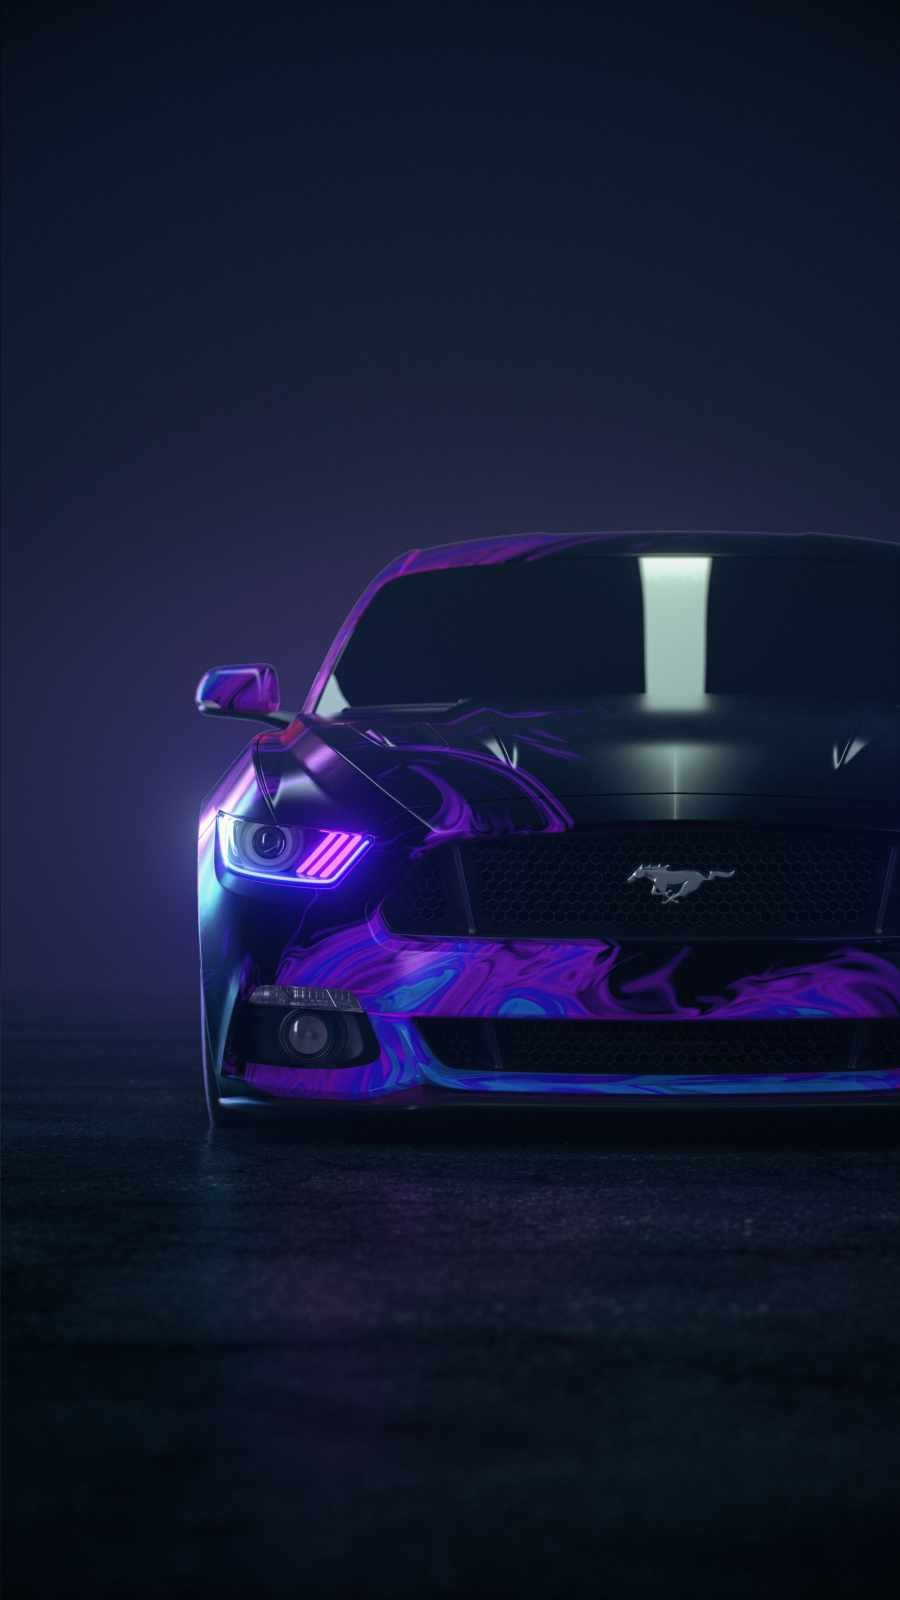 Wallpaper Night Cars Automotive Lighting Purple Hood Background   Download Free Image